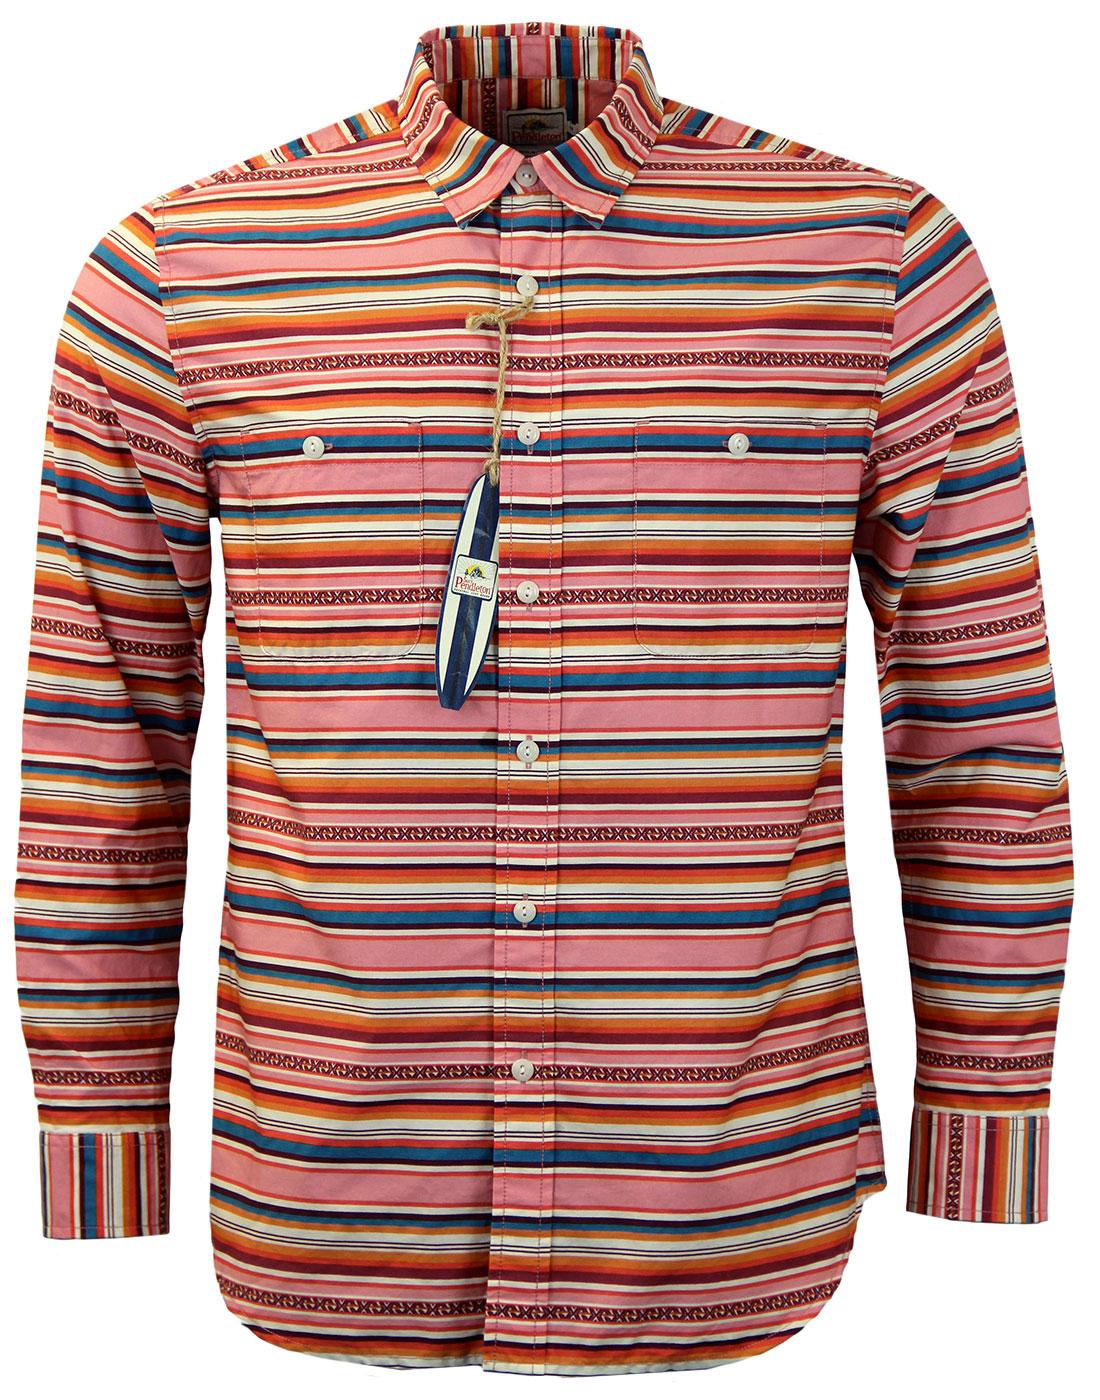 PENDLETON Serape Surf Stripe Retro 60s Board Shirt